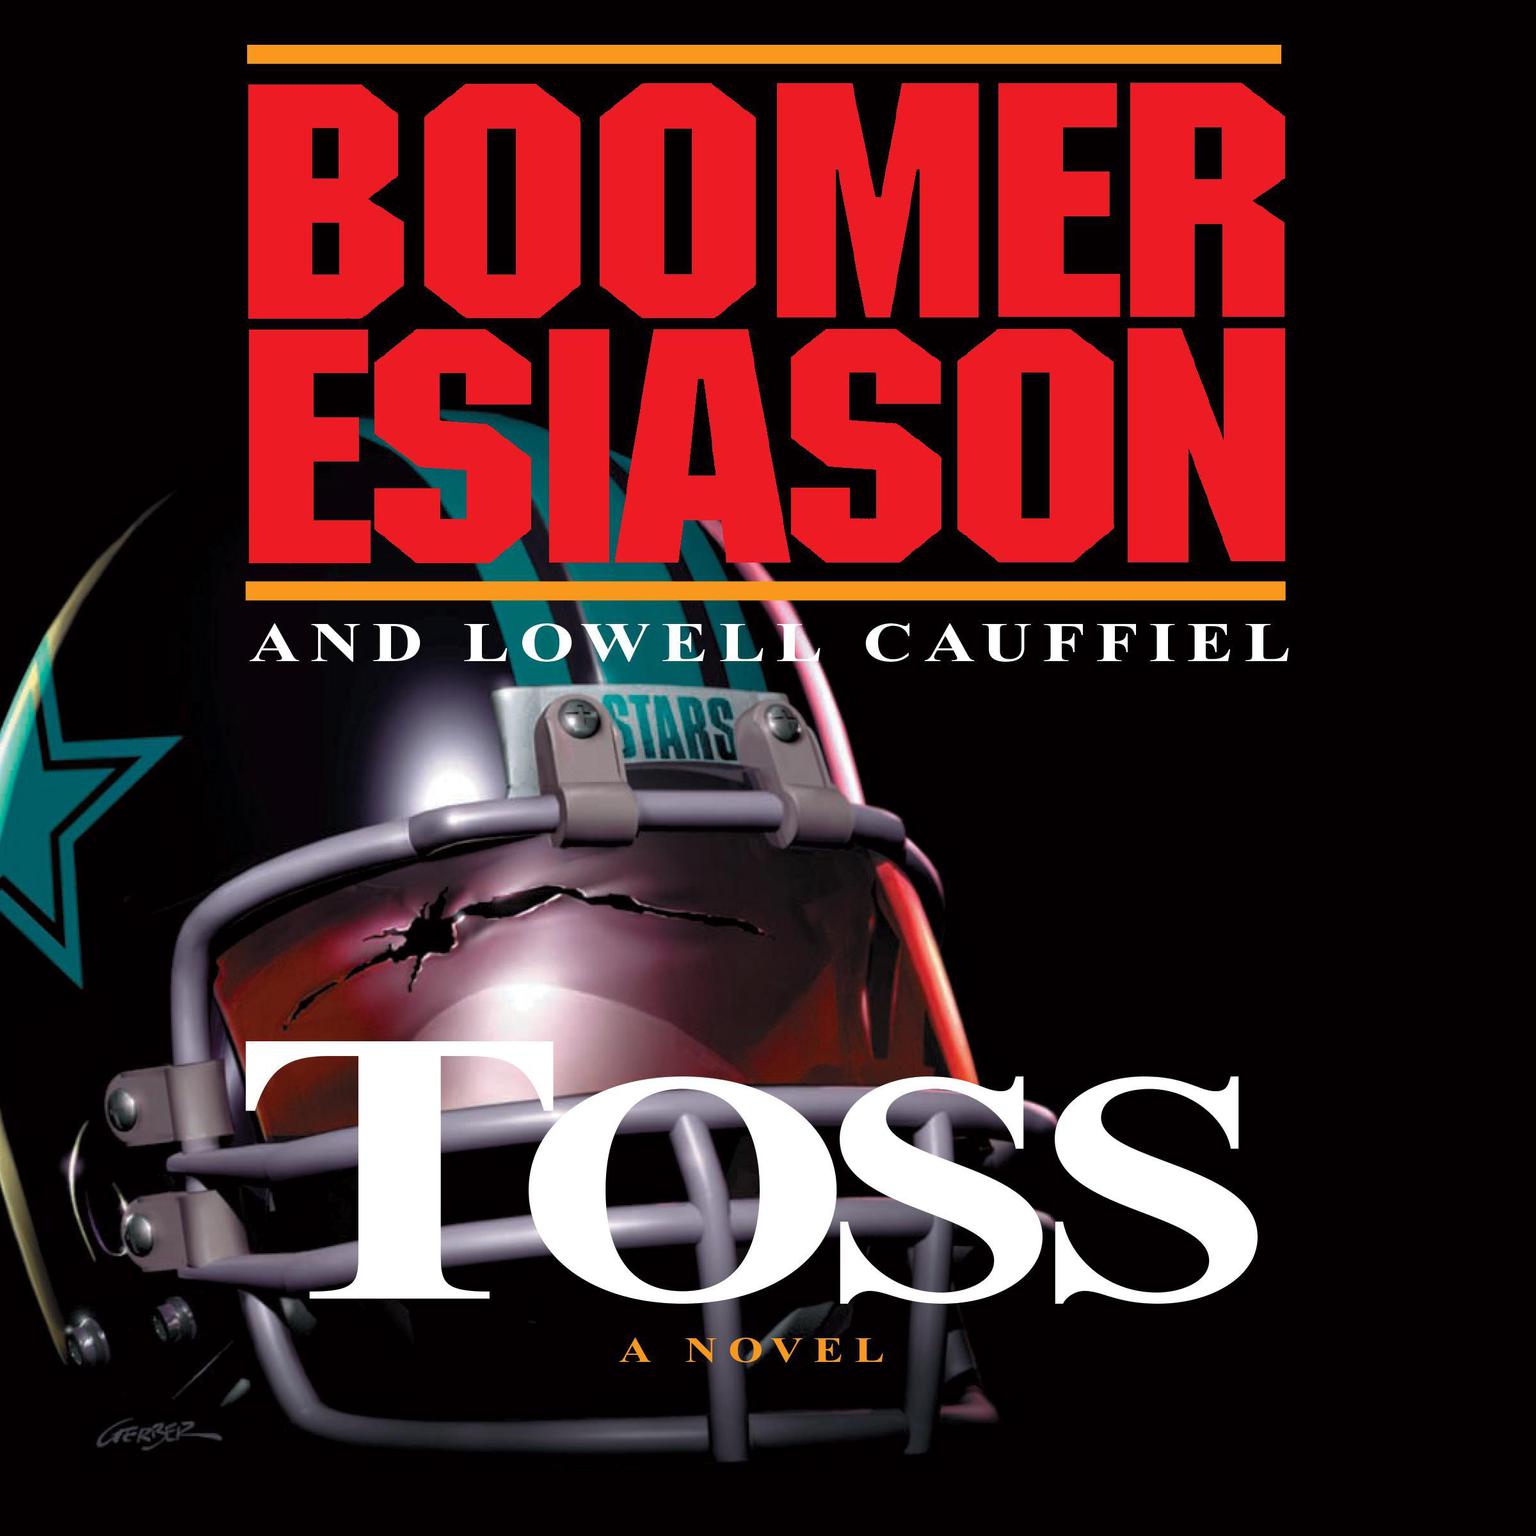 Toss Audiobook, by Boomer Esiason